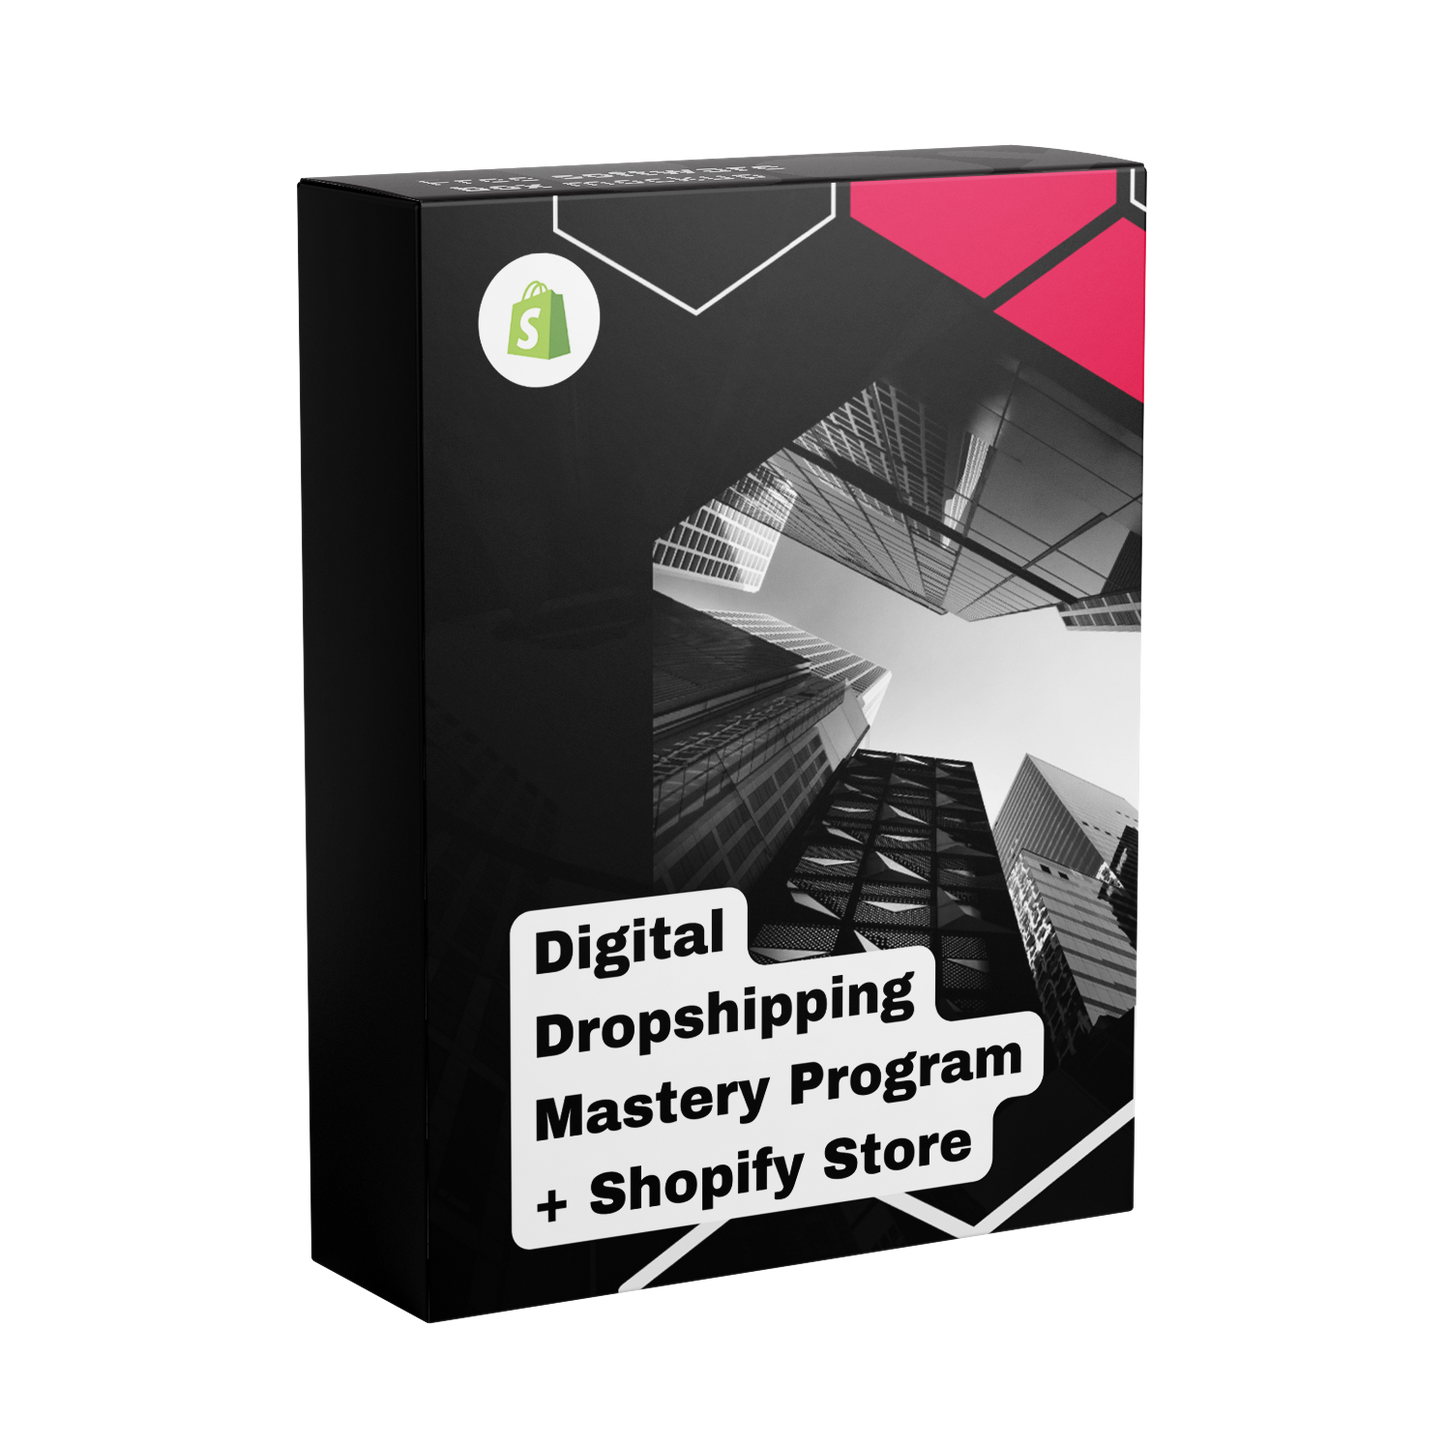 Digital Dropshipping Mastery Program + Shopify Store